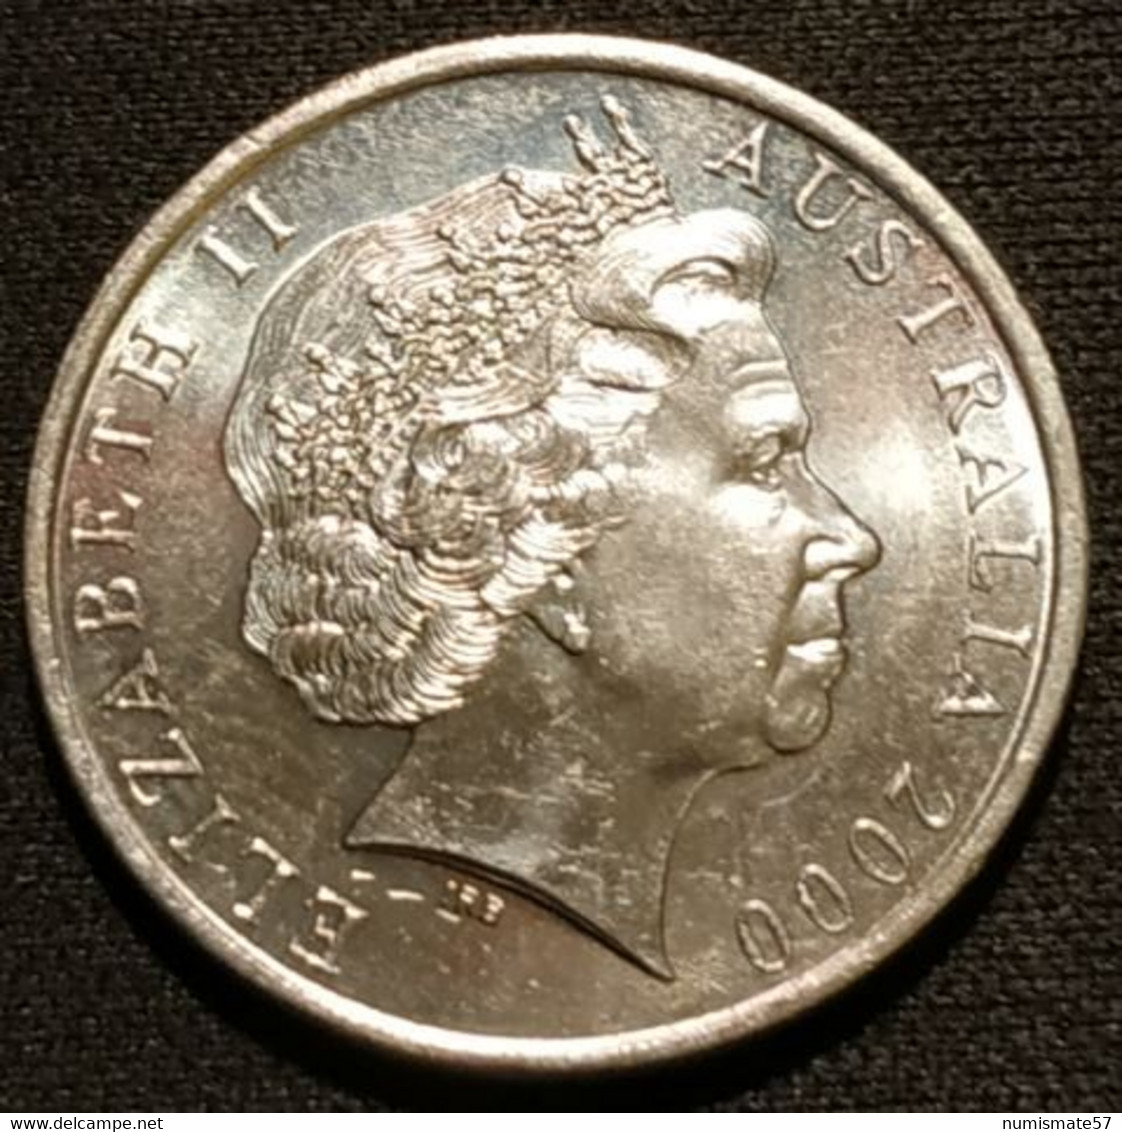 AUSTRALIE - AUSTRALIA - 10 CENTS 2000 - Elizabeth II - 4e Effigie - KM 402 - 10 Cents